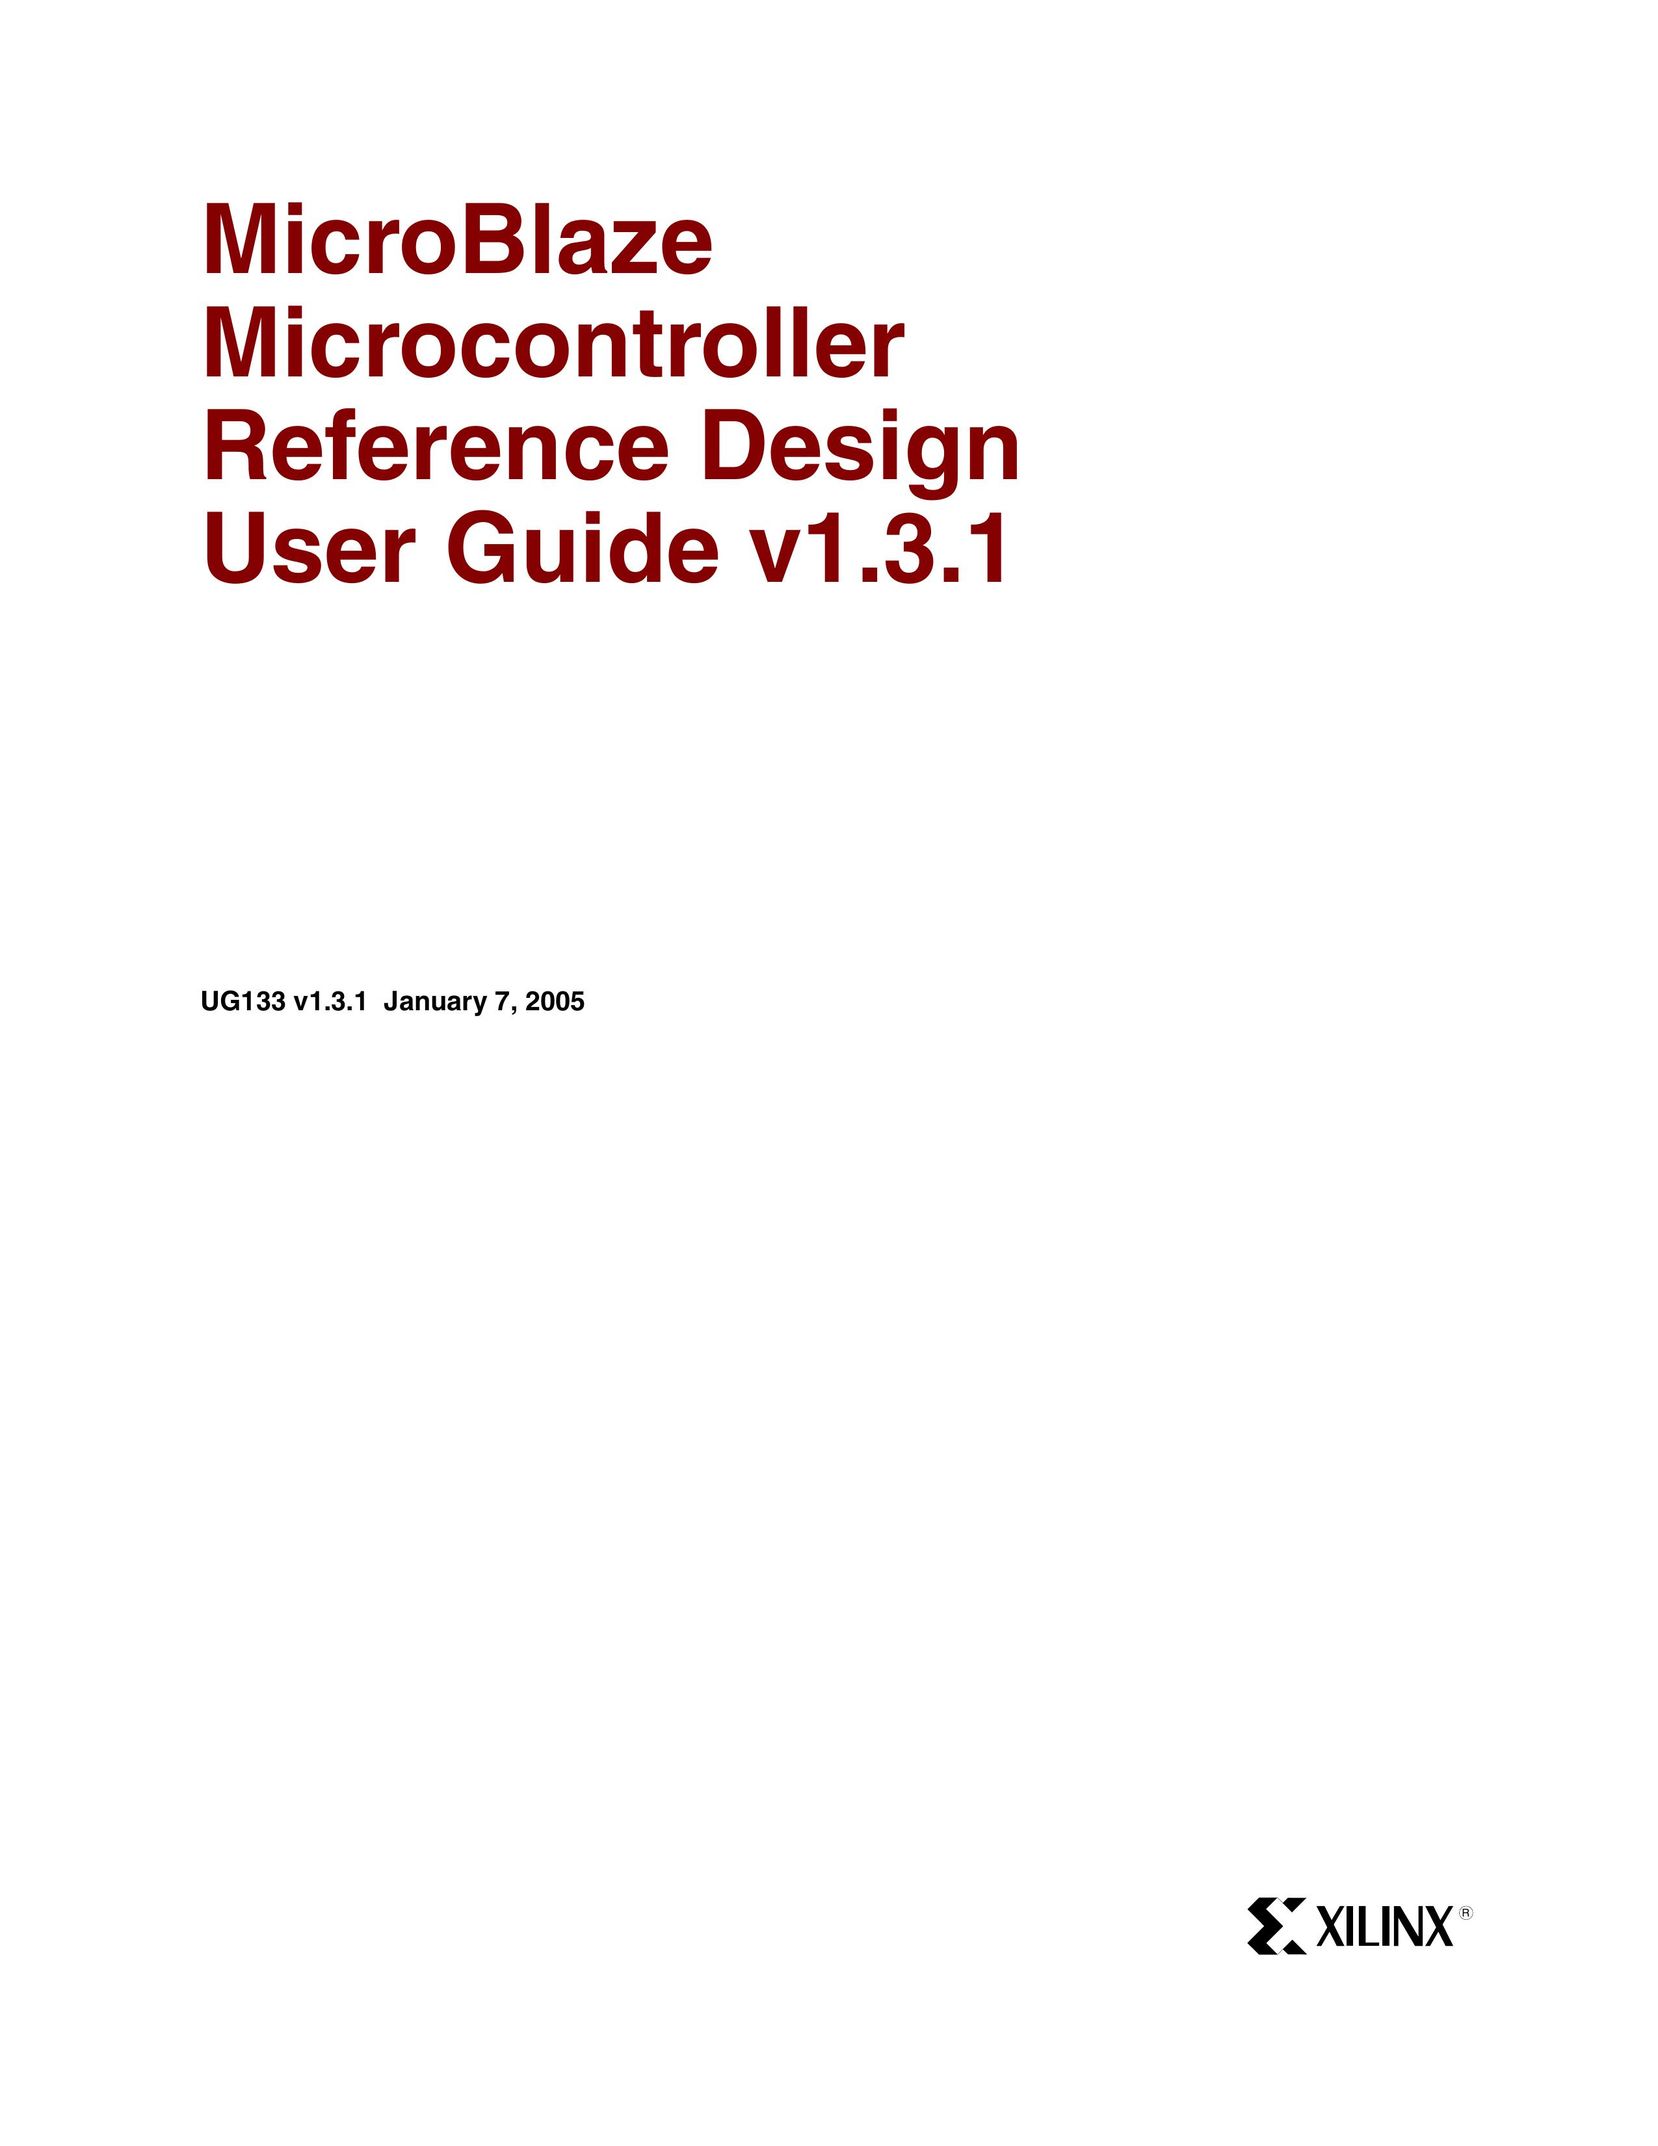 Xilinx UG133 Computer Hardware User Manual